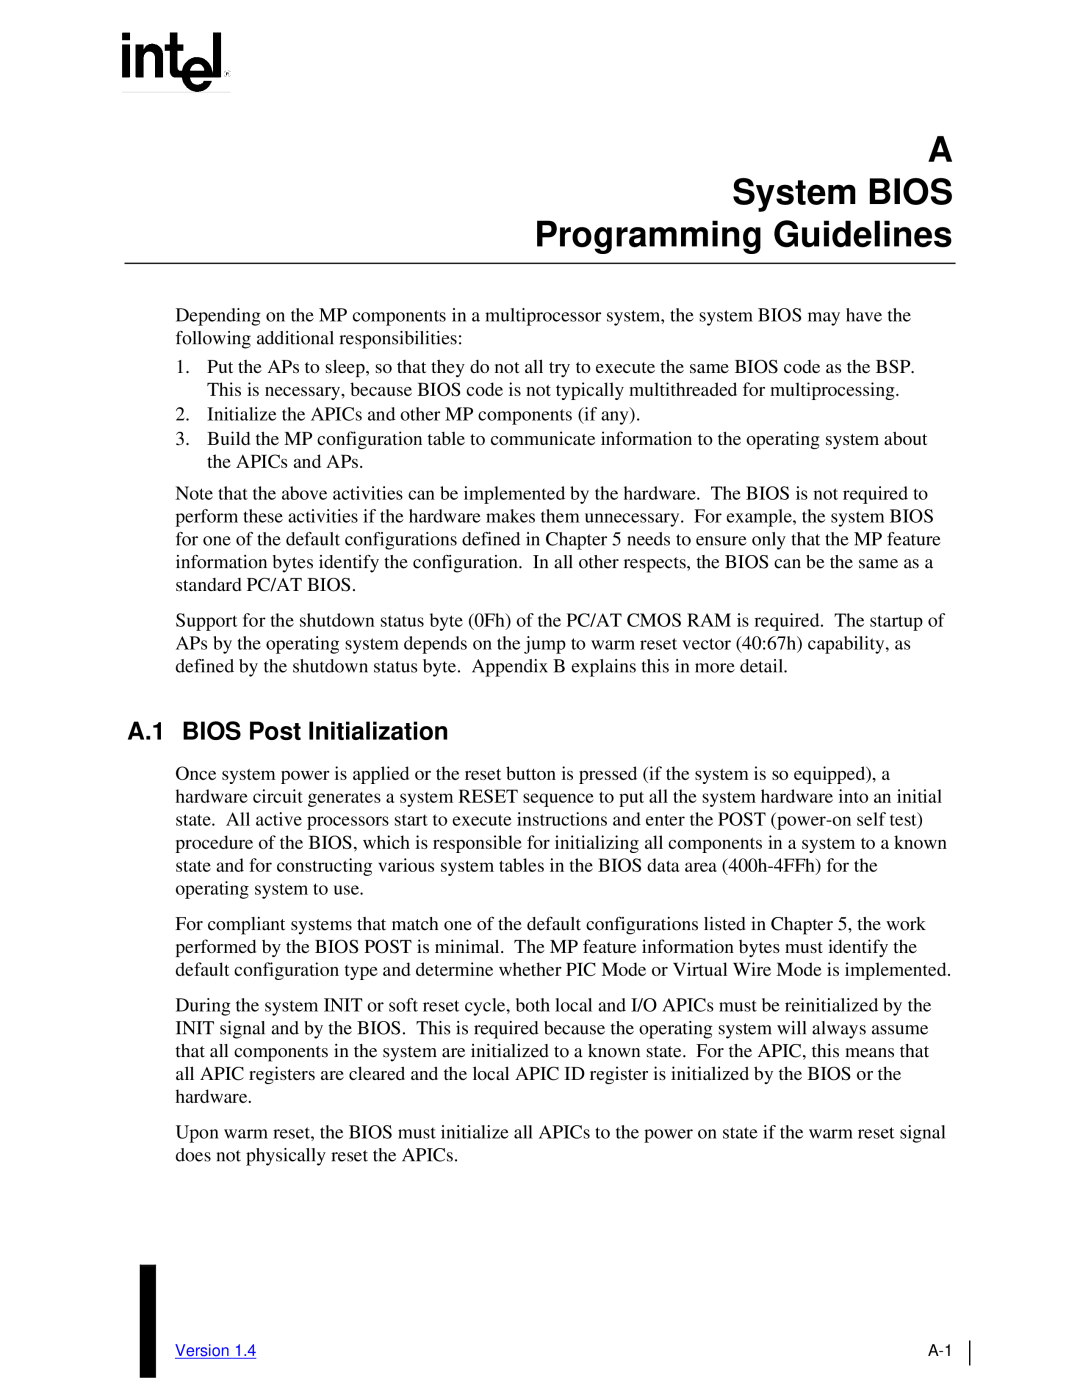 Intel MultiProcessor manual A System BIOS Programming Guidelines, A.1 BIOS Post Initialization 